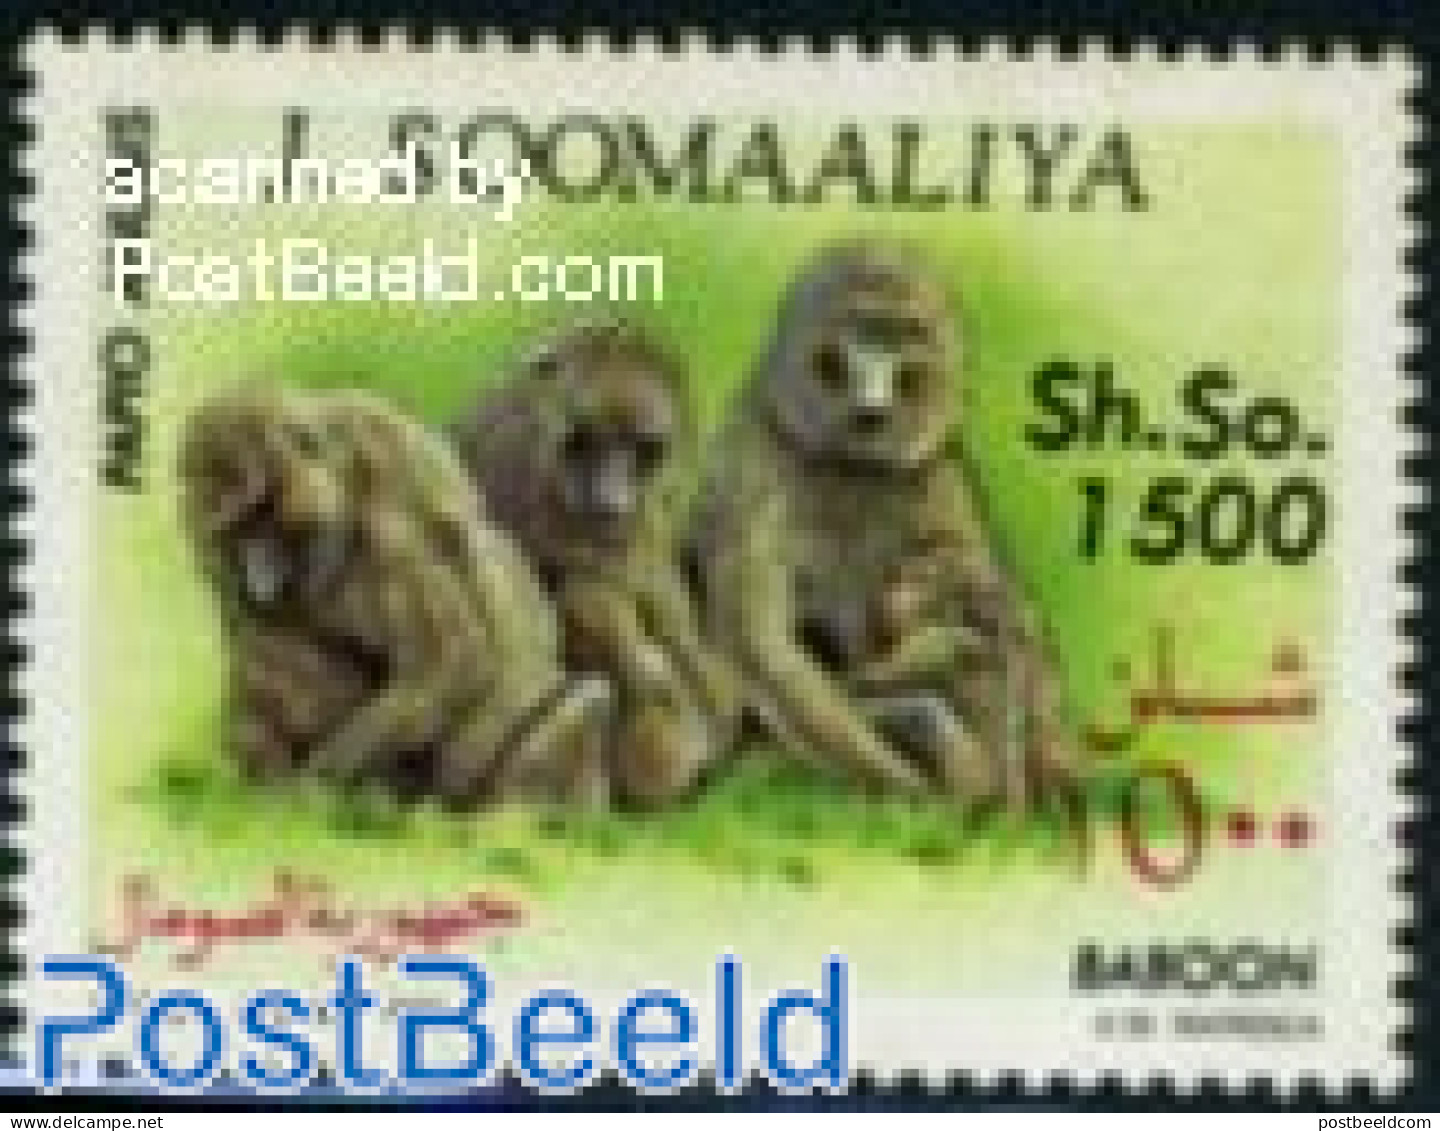 Somalia 1992 1500Sh., Stamp Out Of Set, Mint NH, Nature - Monkeys - Somalie (1960-...)